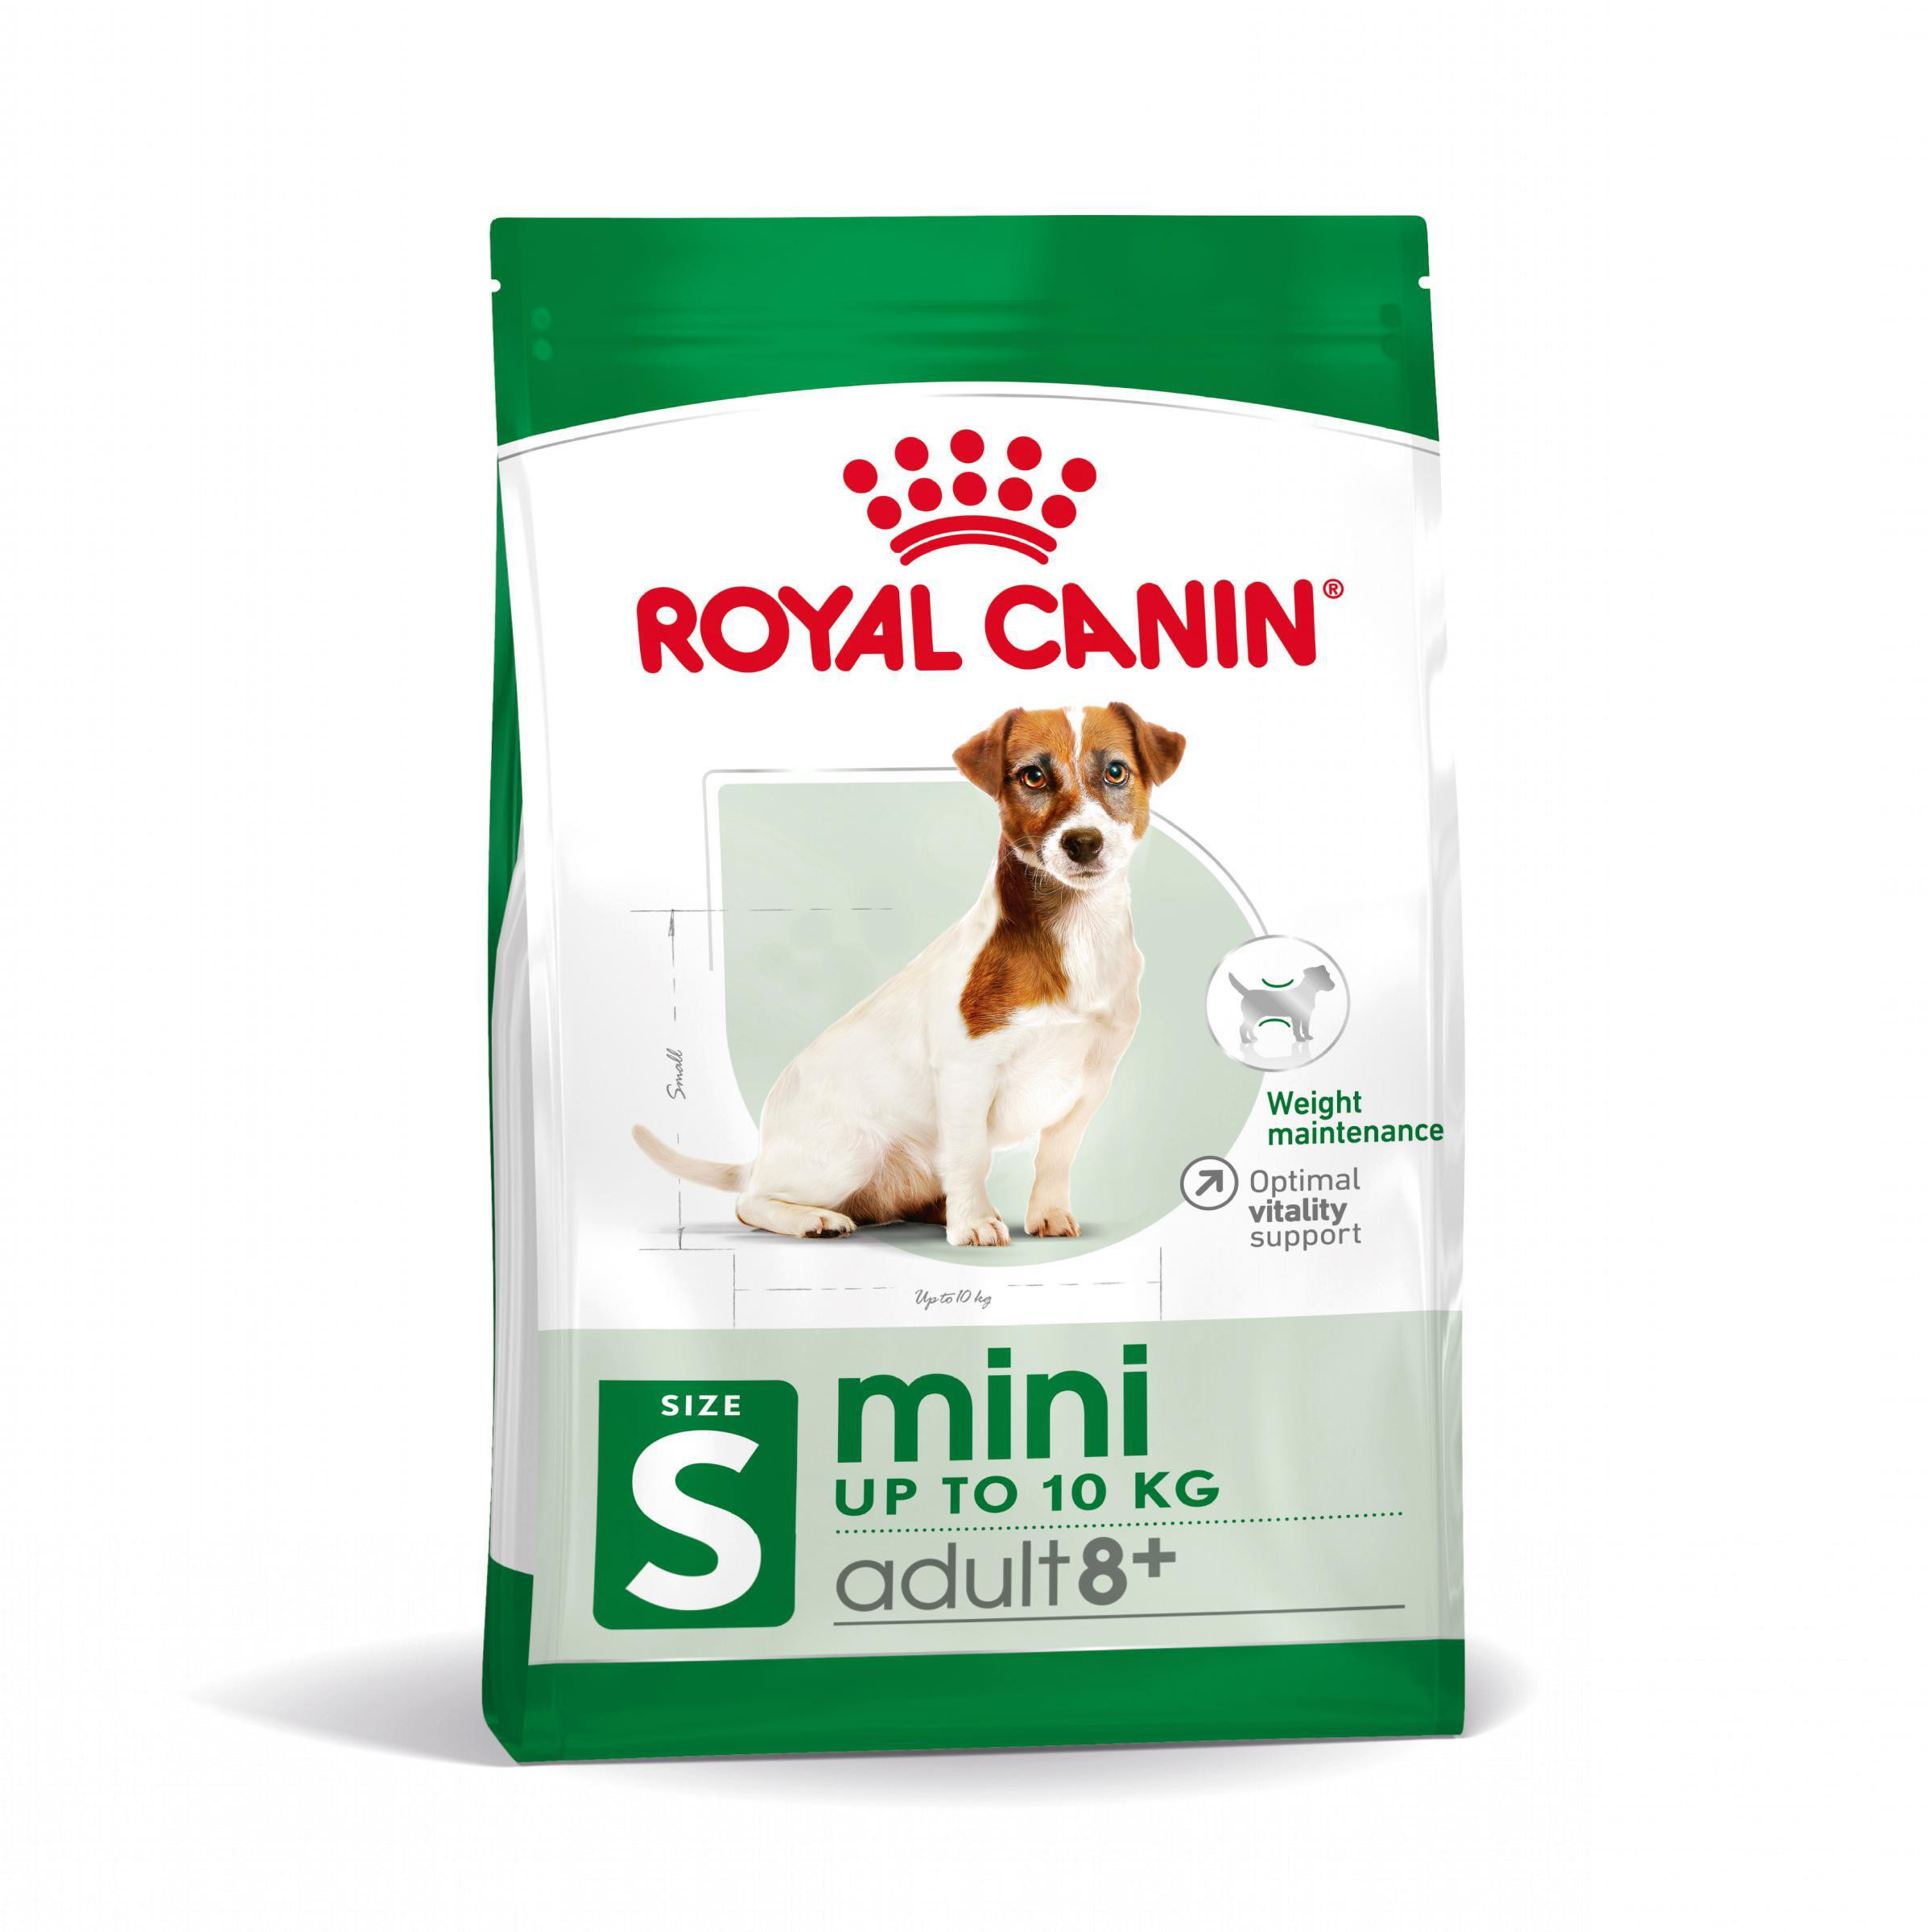 Royal Canin Mini Adult 8+ hondenvoer